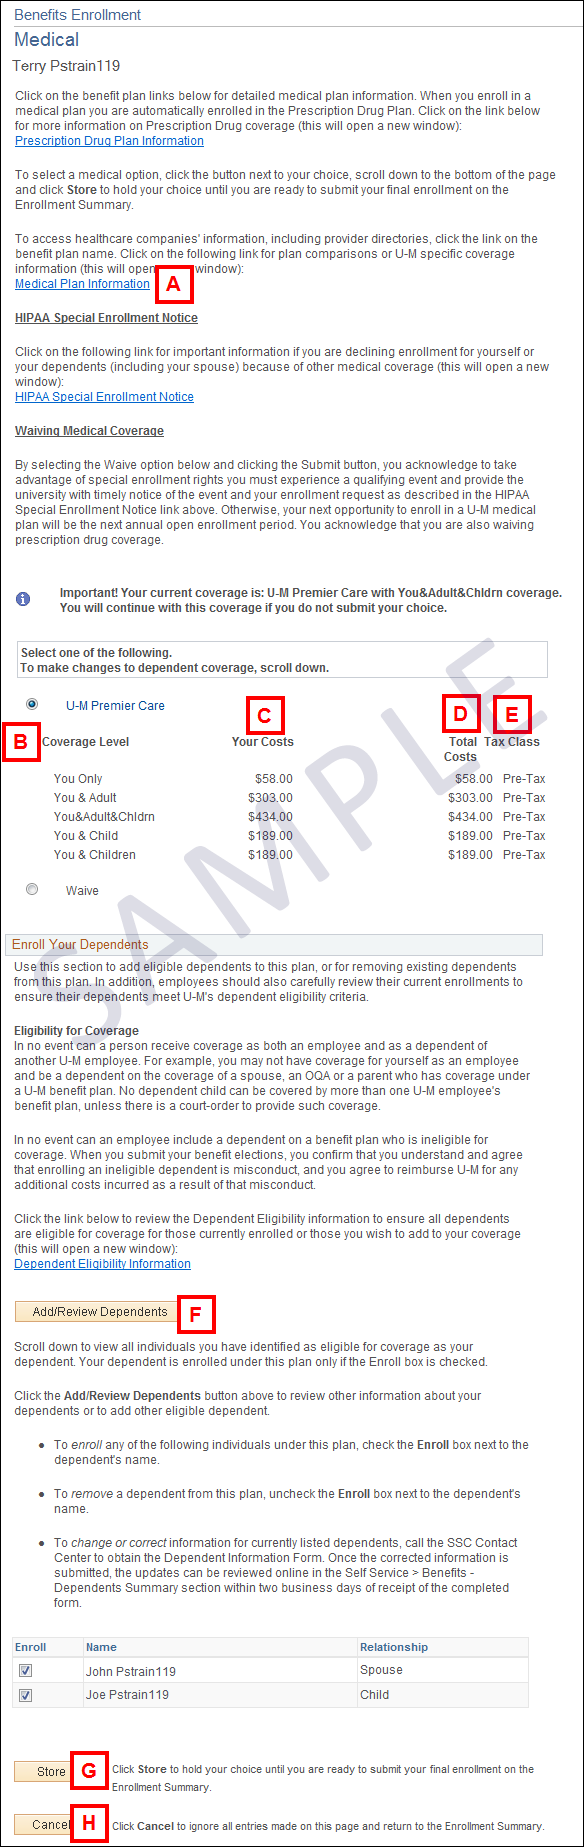 Benefits Enrollment - Confirmation Statement Screenshot